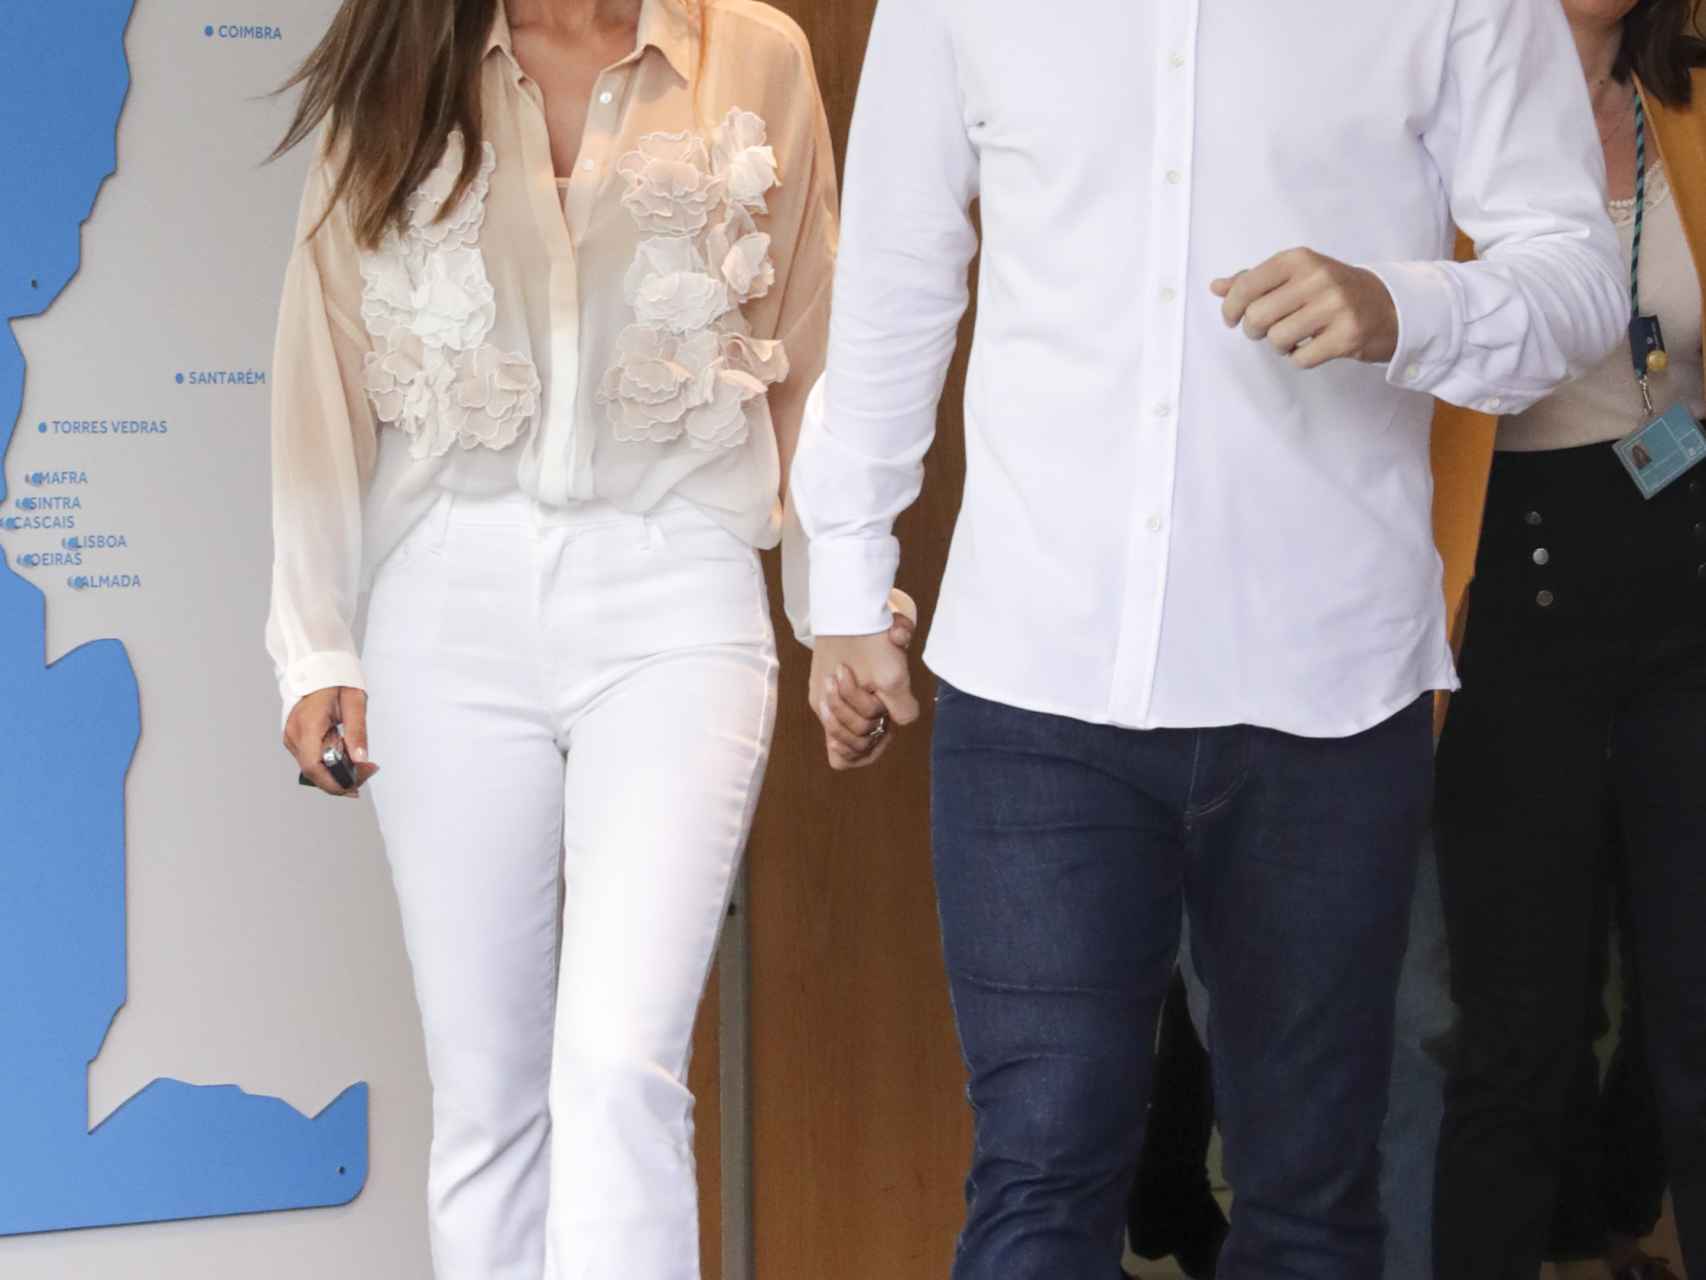 Sara e Iker en una imagen en mayo de 2019 a la salida del hospital en Portugal.